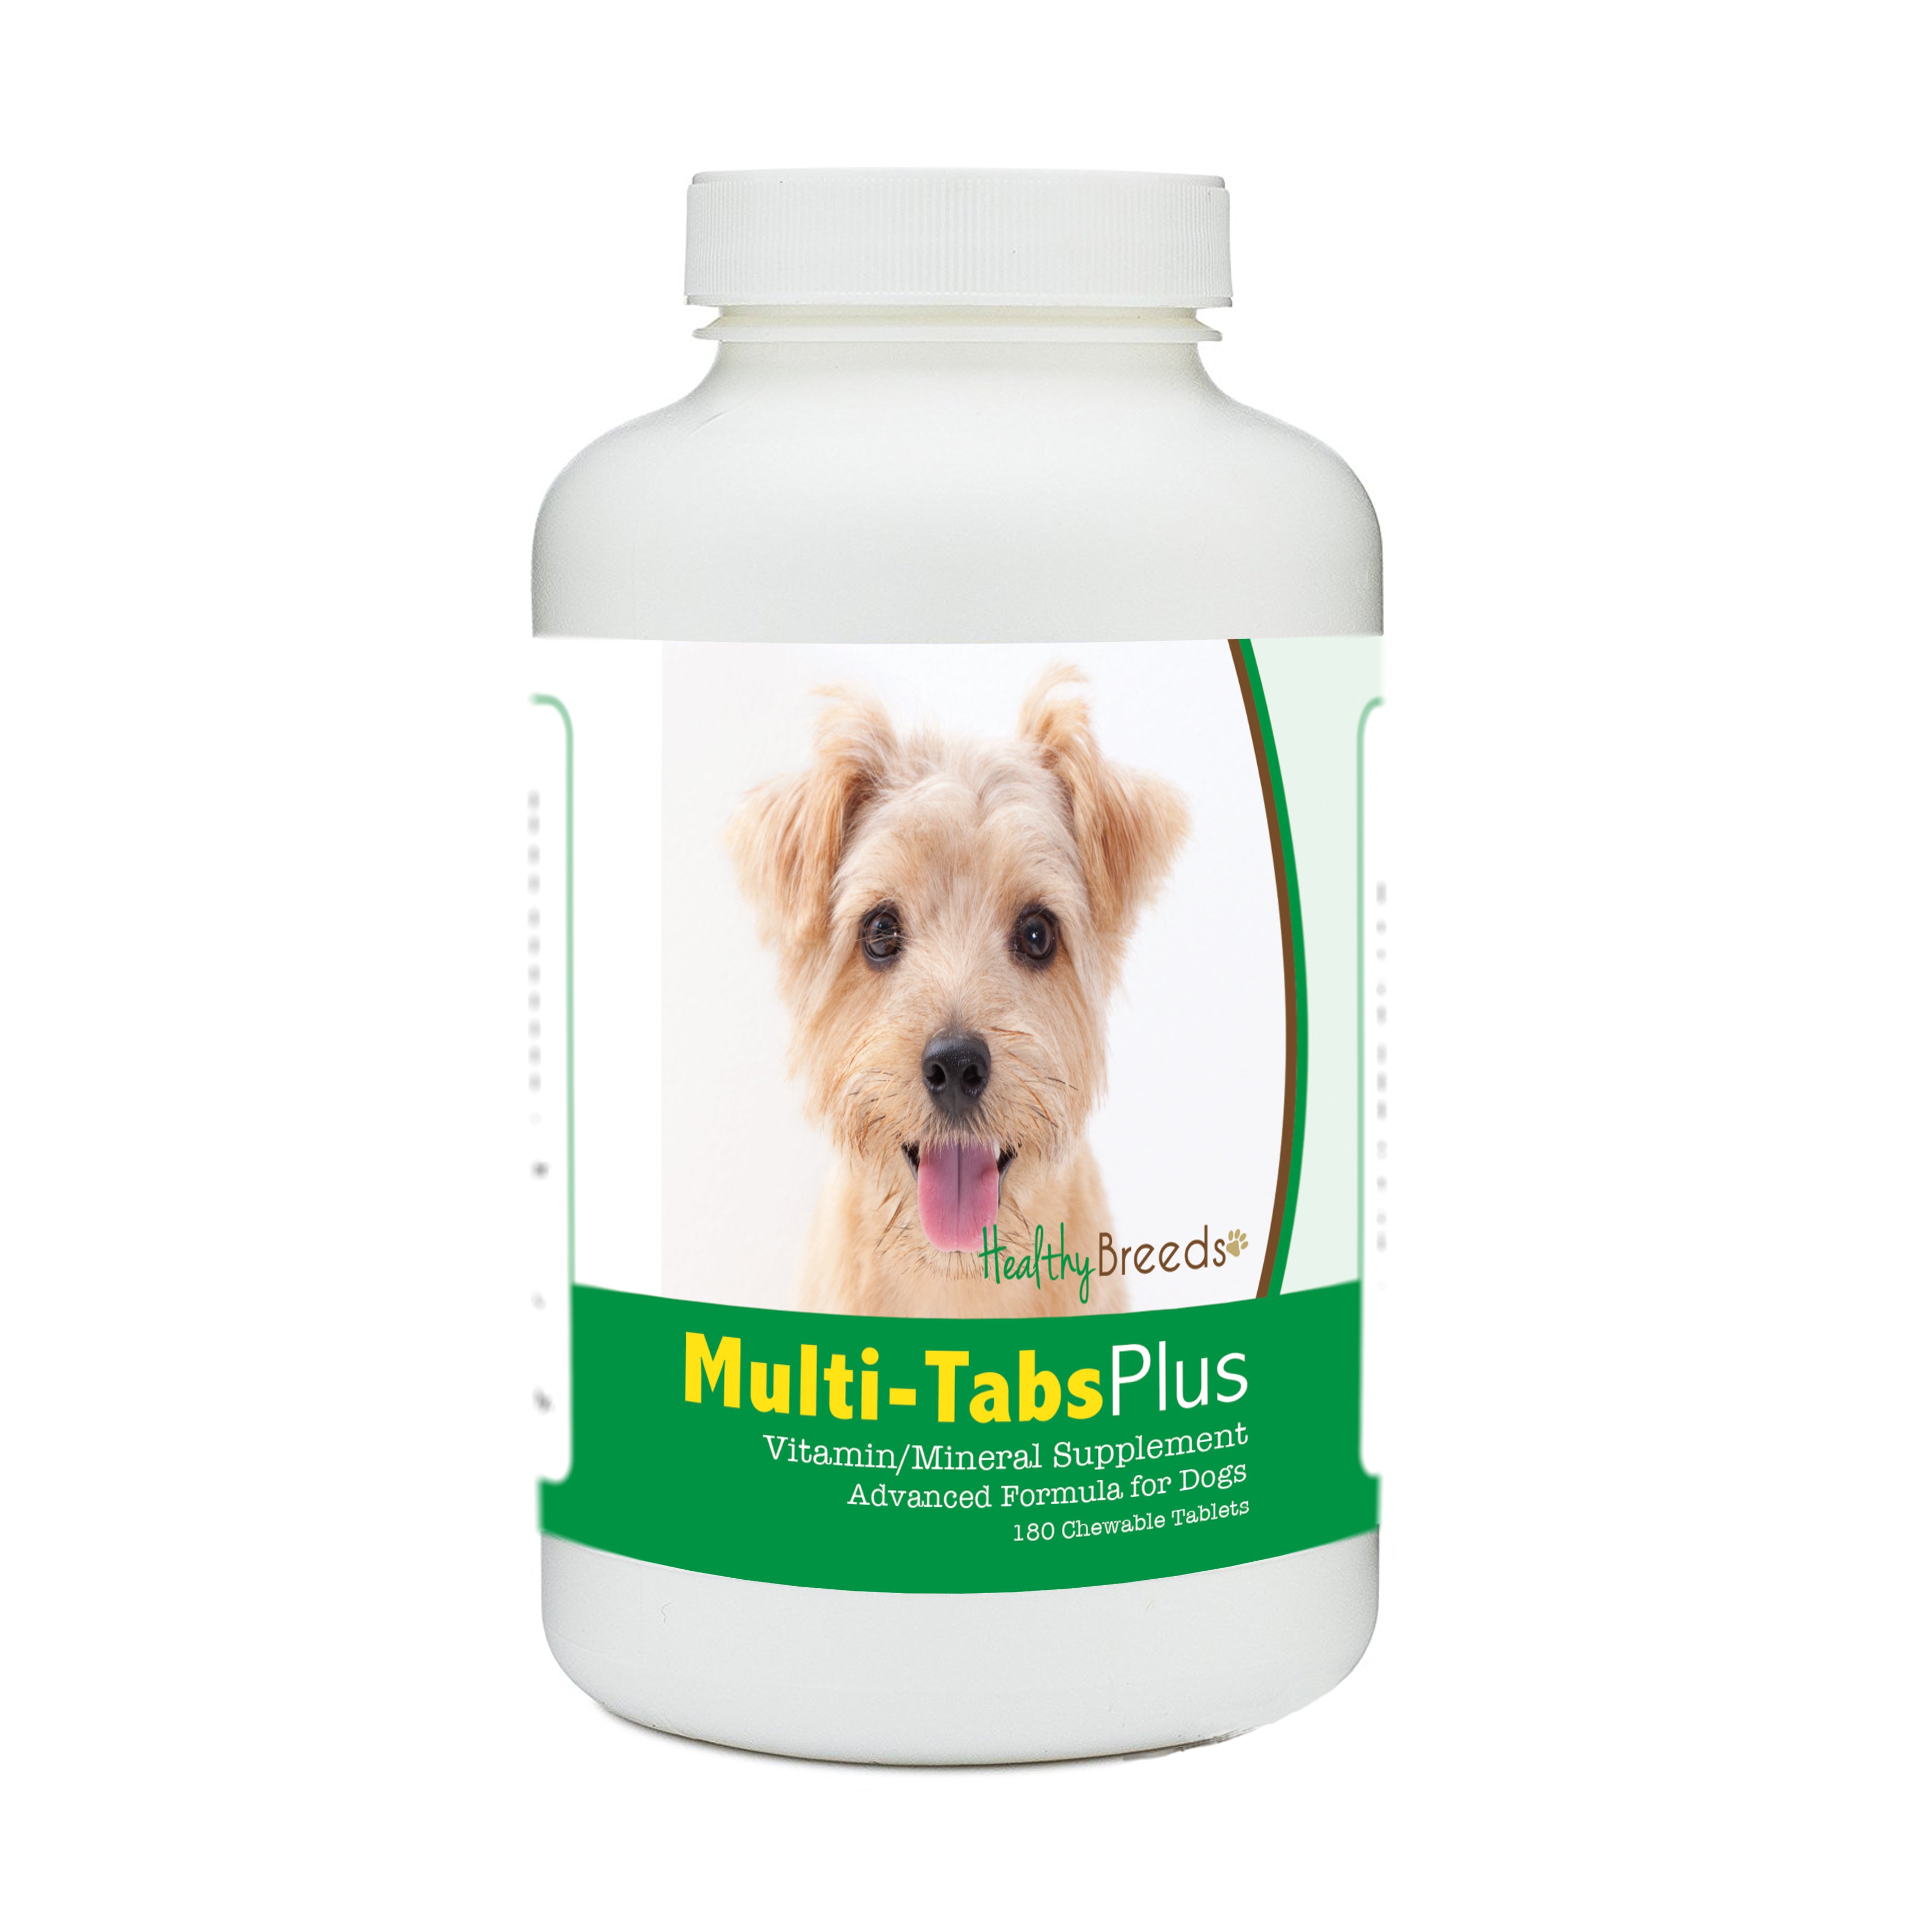 Norfolk Terrier Multi-Tabs Plus Chewable Tablets 180 Count